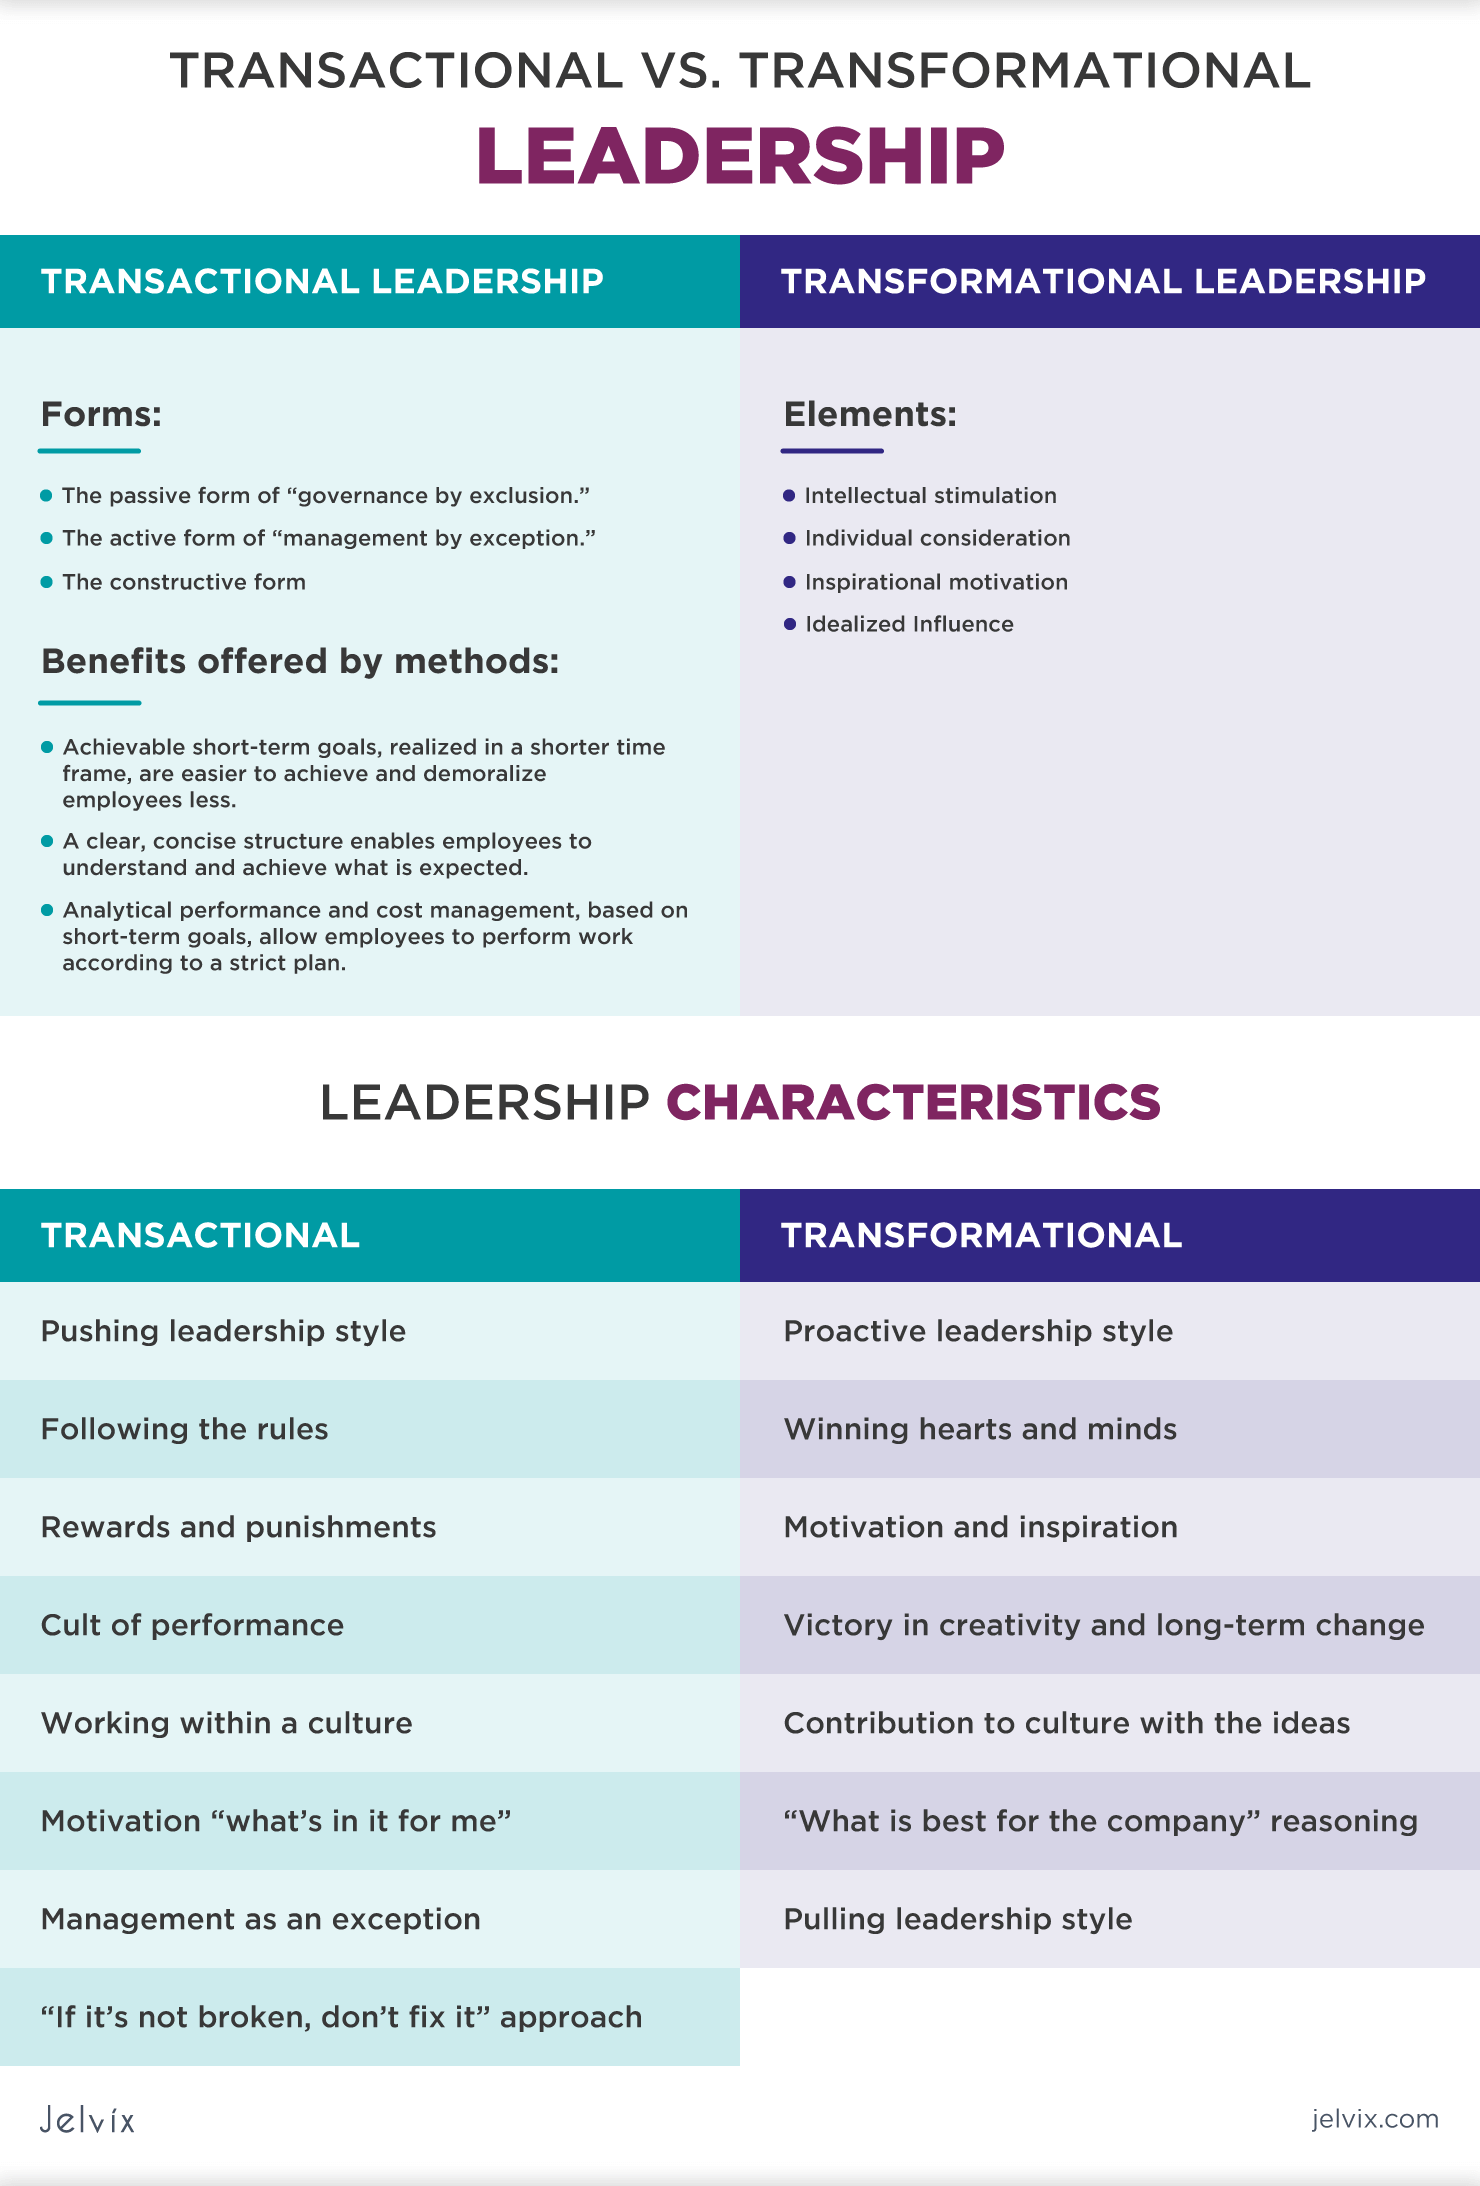 transactional leadership vs transformational leadership